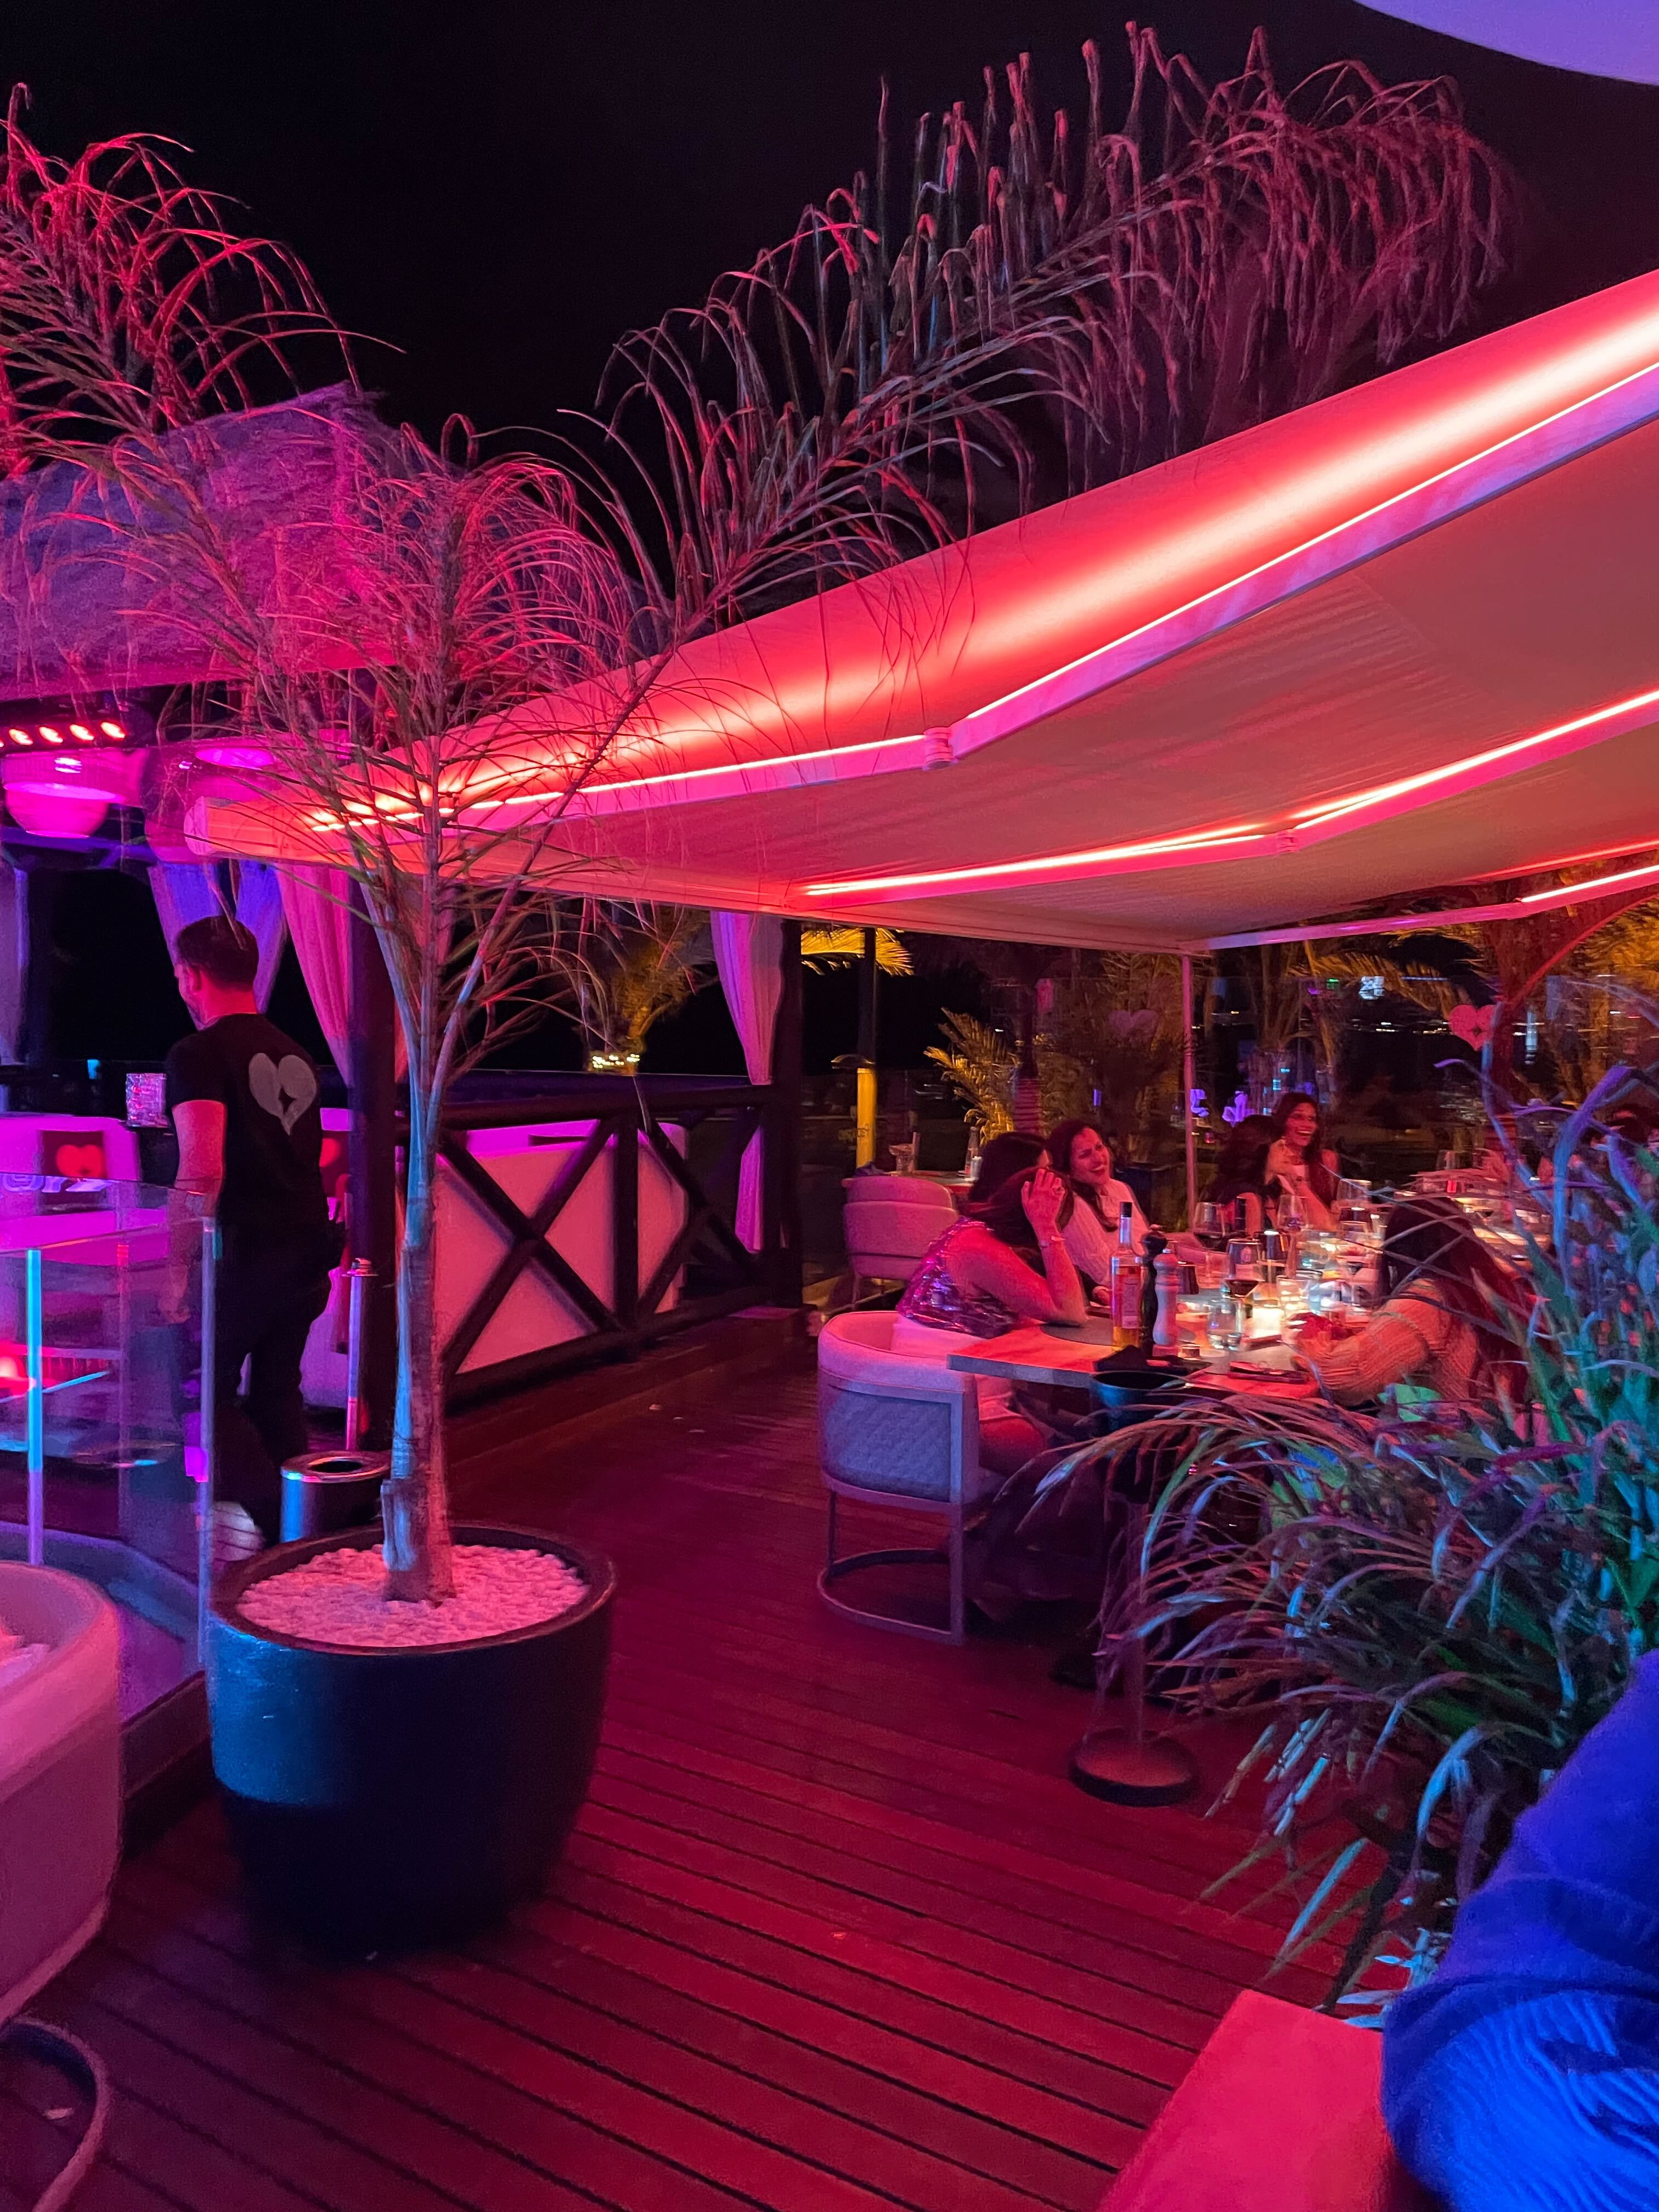 Papagayo’s nightclub is located at the end of Veronica’s strip in Playa de Las Americas